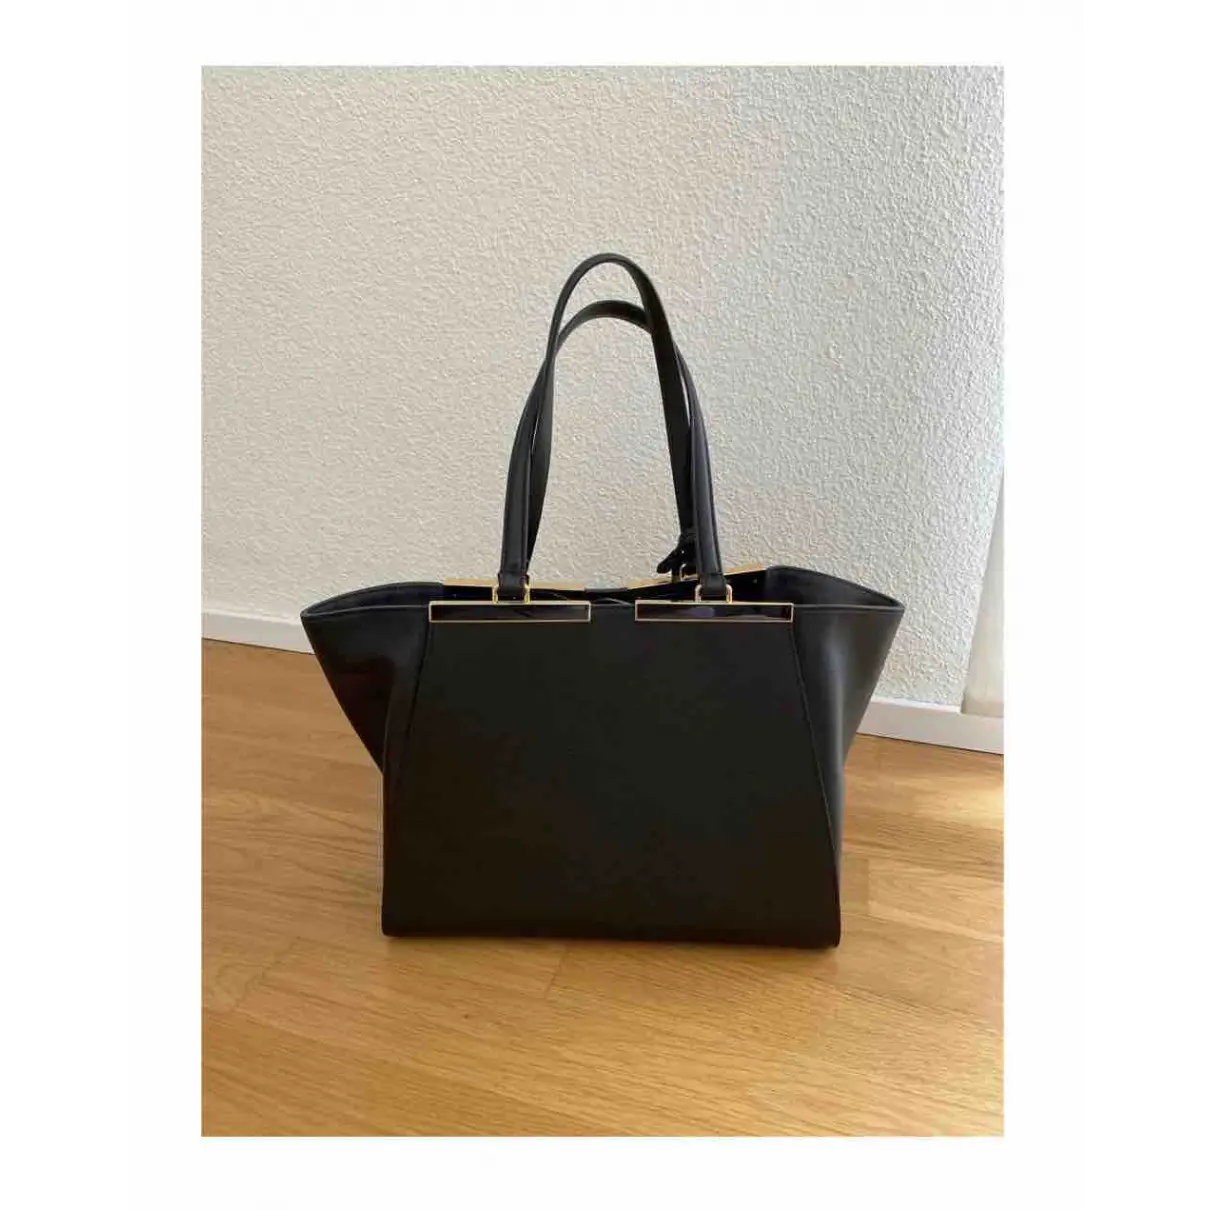 Buy Fendi 3Jours leather handbag online